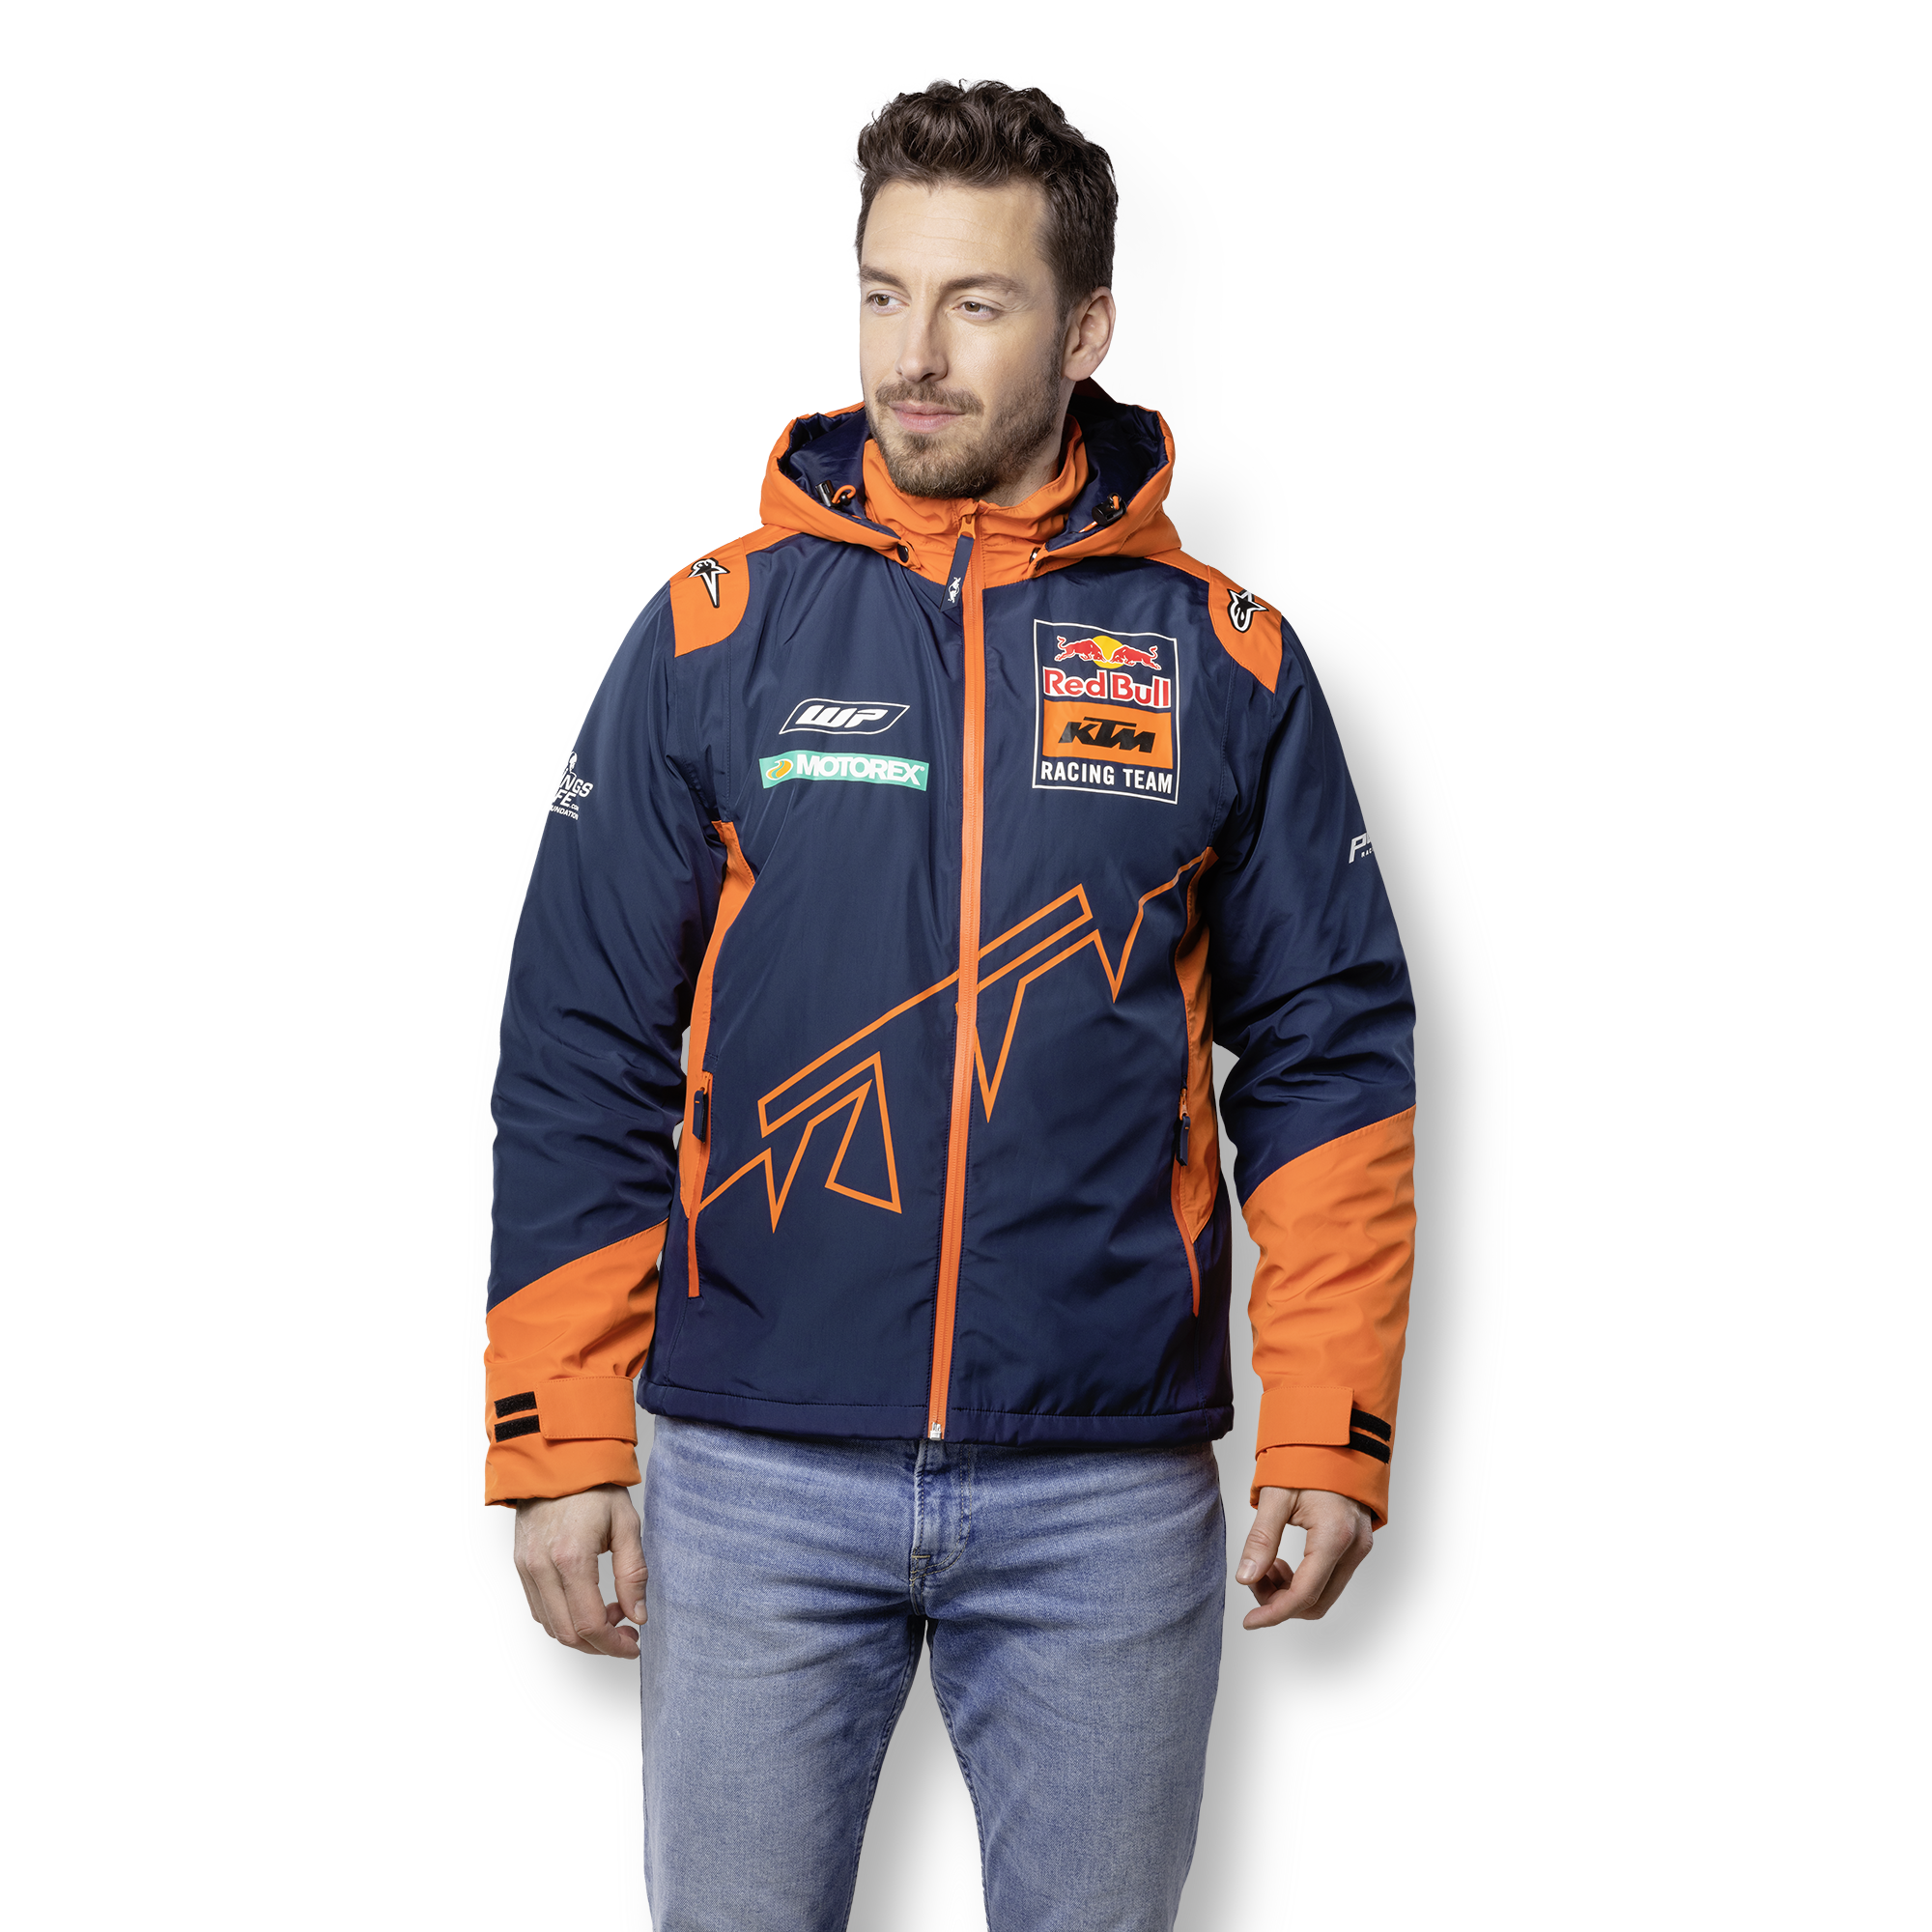 Alcatraz Island haalbaar regeren Red Bull KTM Racing Team Official Teamline Winter Jacket